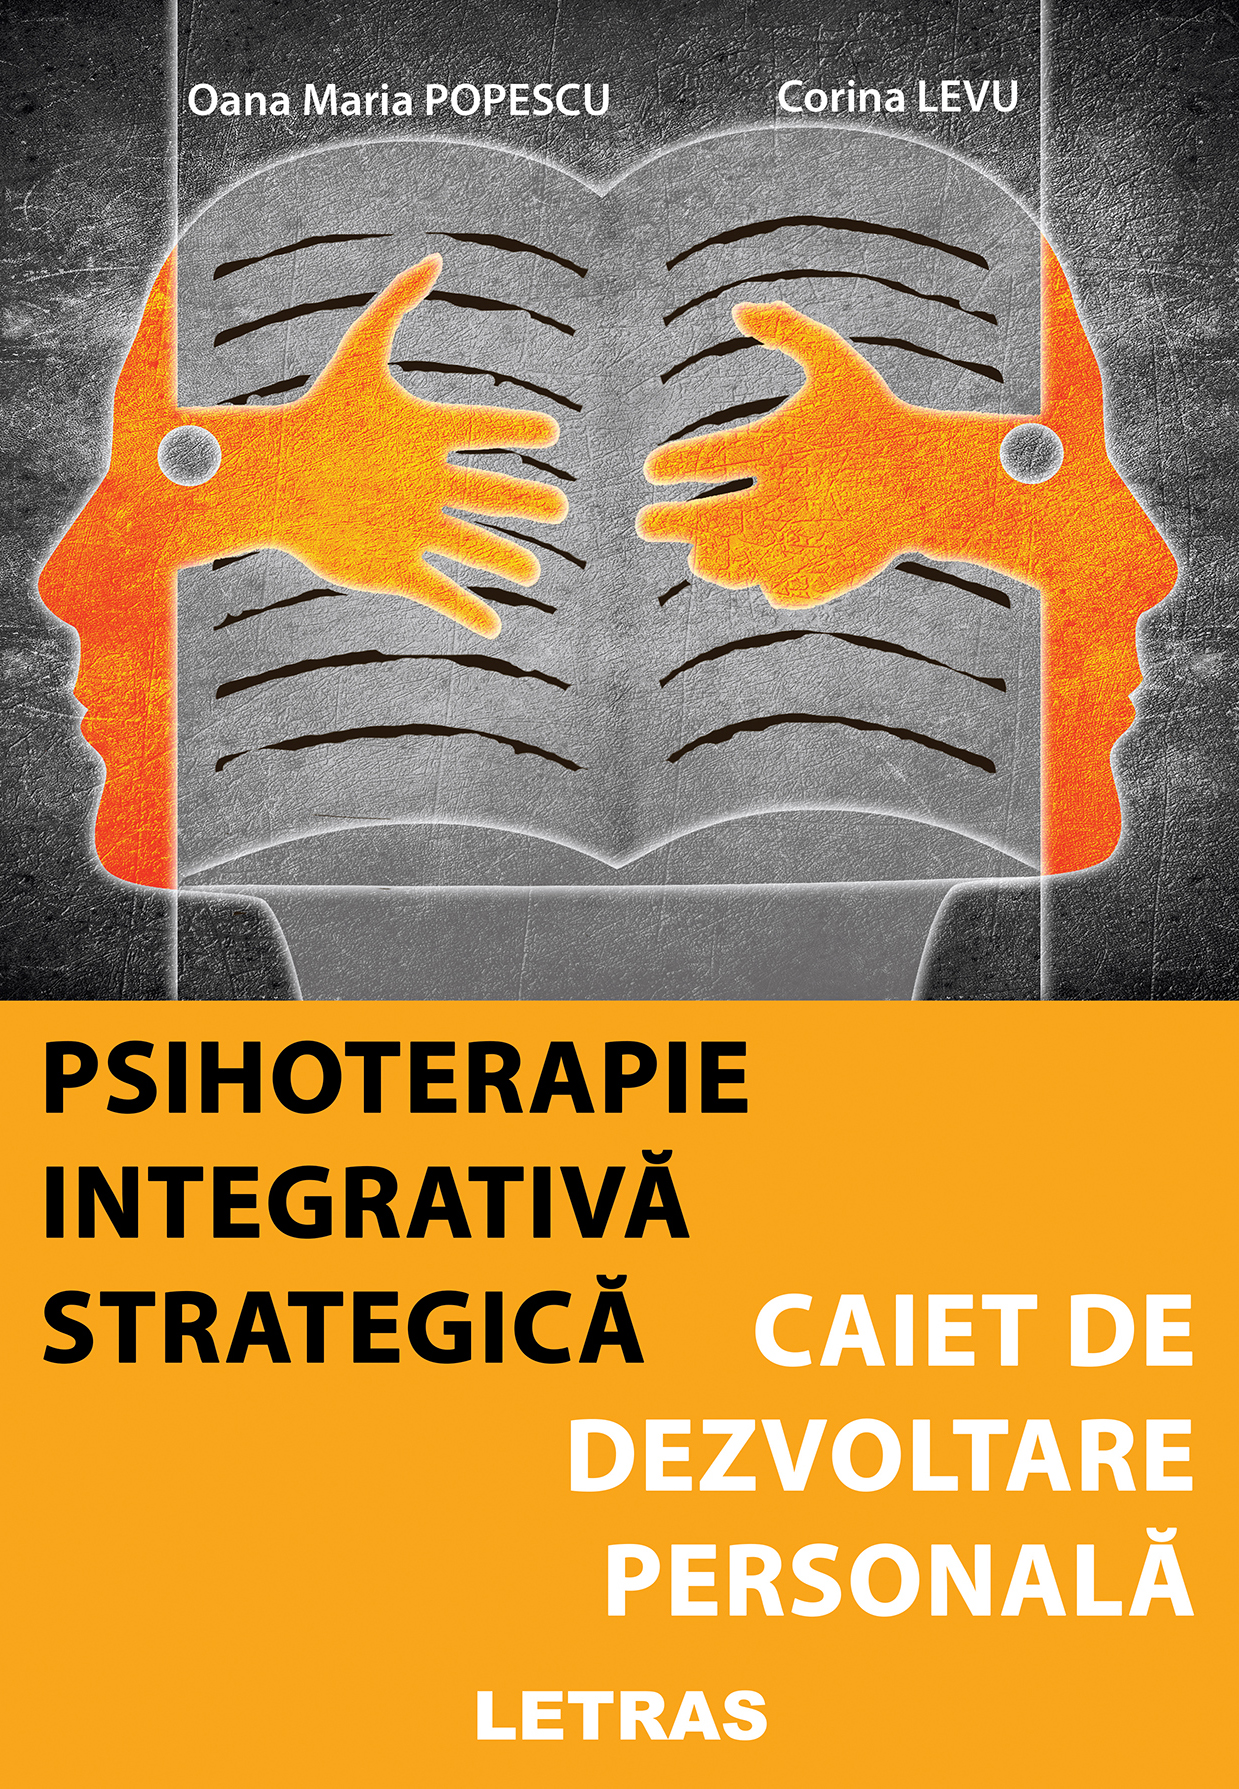 Psihoterapie integrativa strategica. Caiet de dezvoltare personala | Oana Maria Popescu, Corina Levu